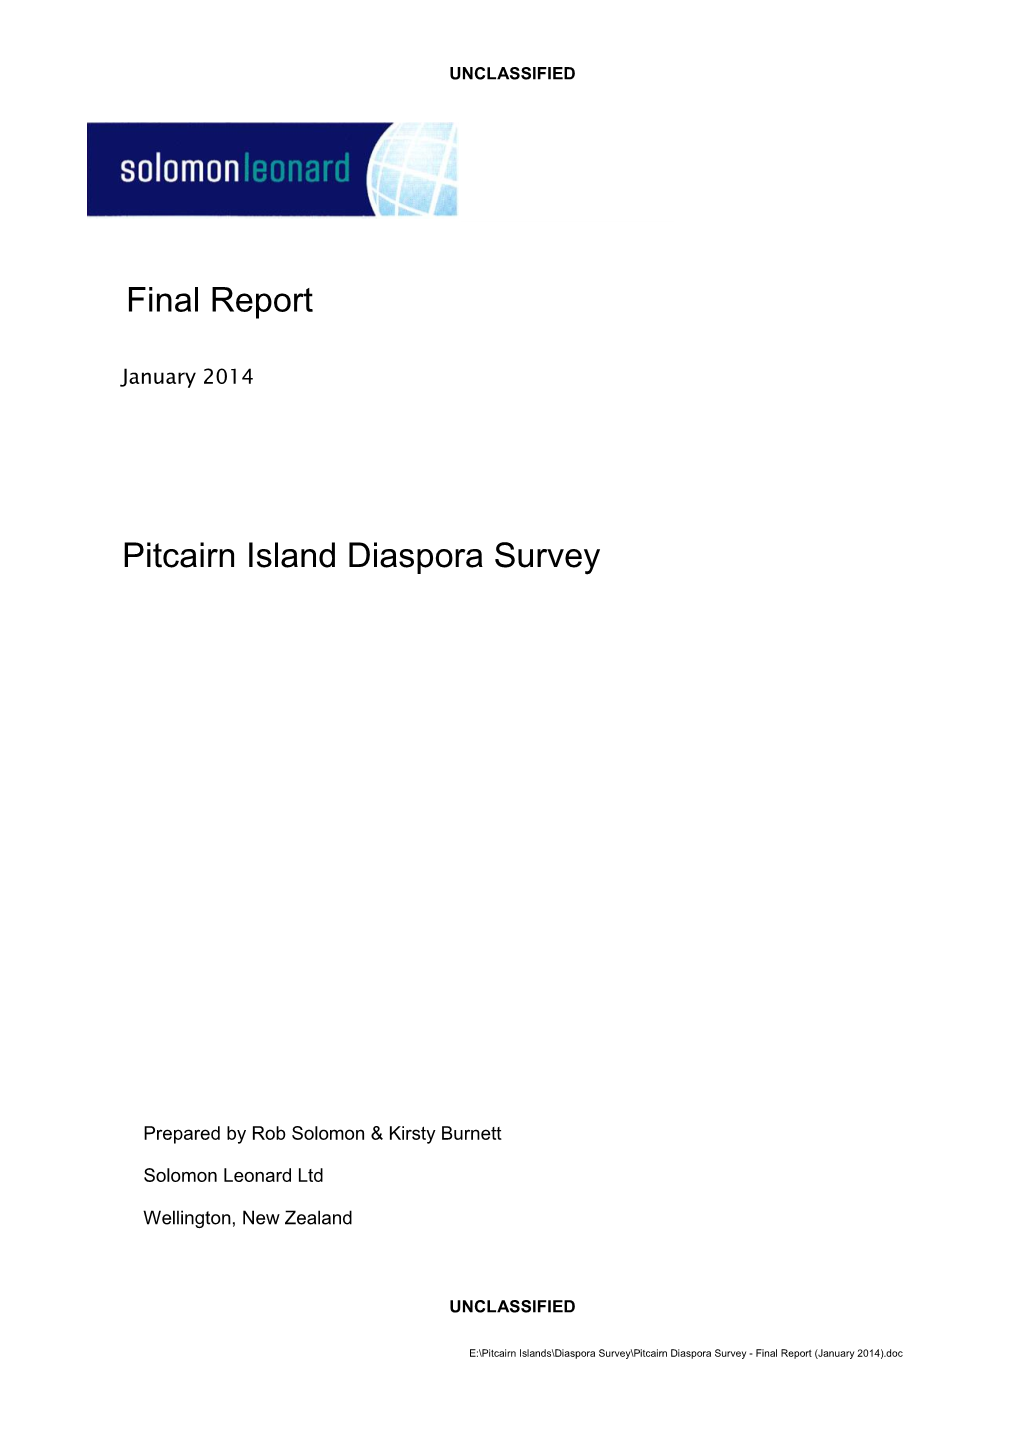 Pitcairn Diaspora Survey - Final Report (January 2014).Doc UNCLASSIFIED